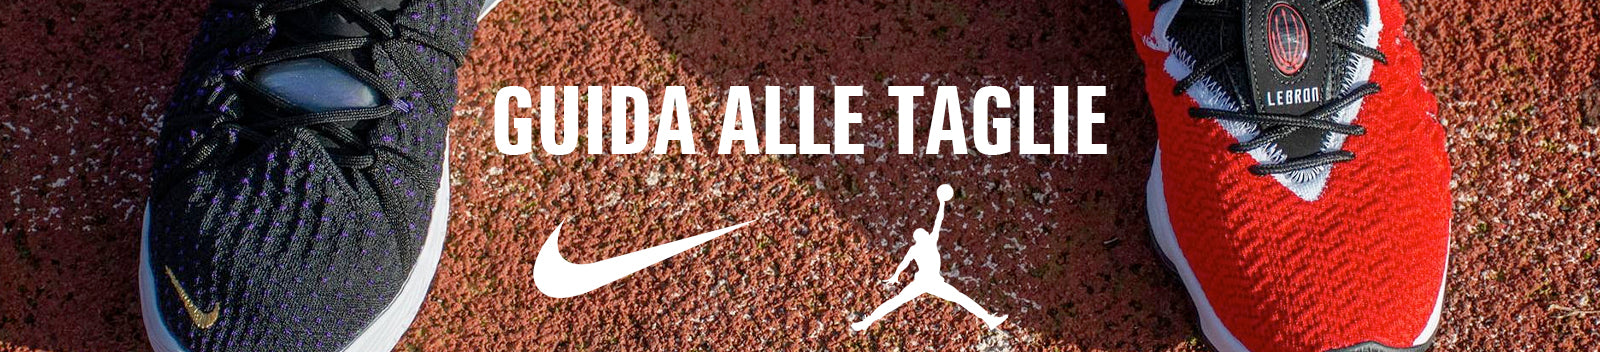 Guida alle taglie Nike - TripleBasket